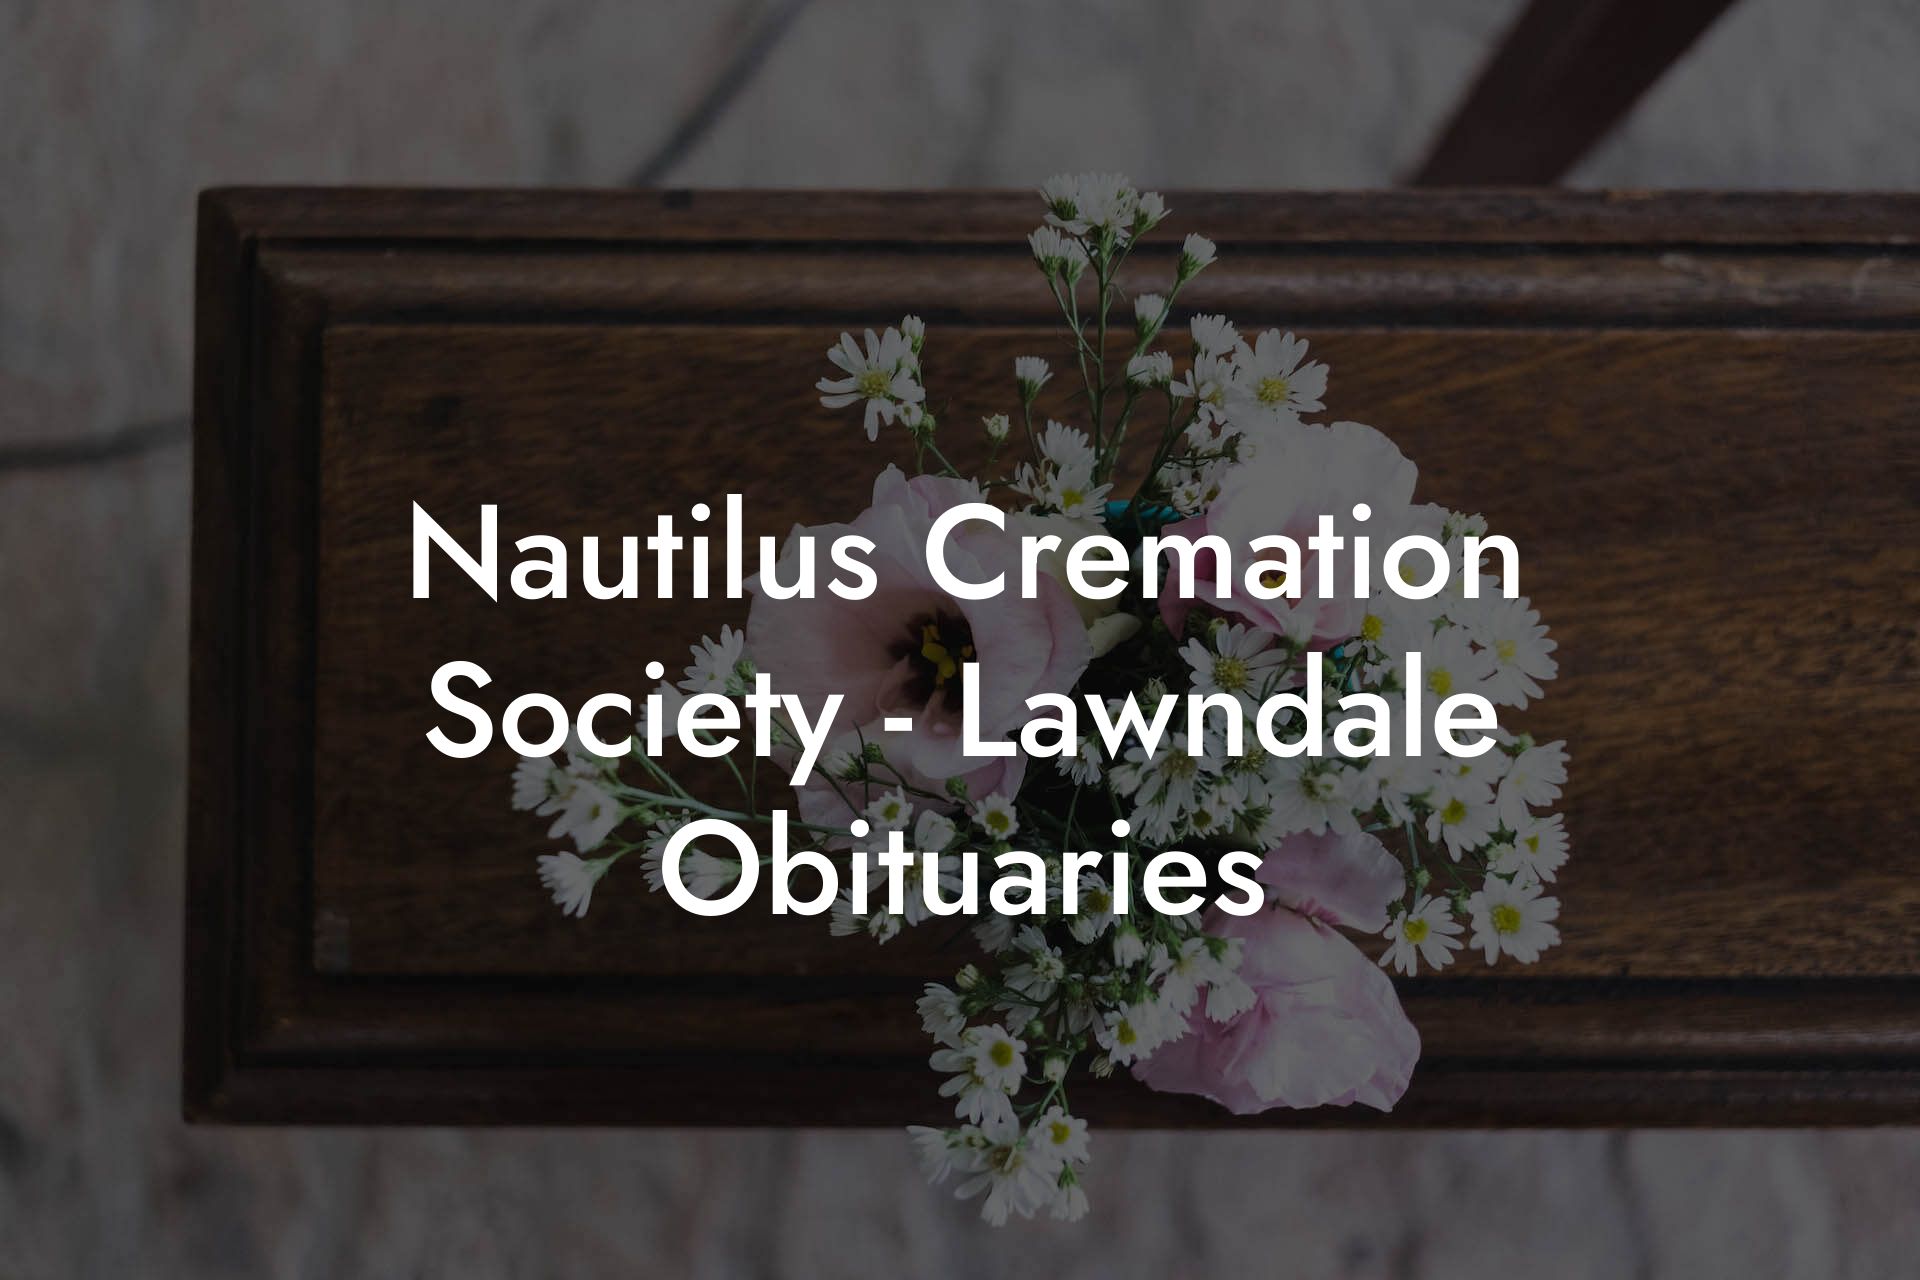 Nautilus Cremation Society - Lawndale Obituaries